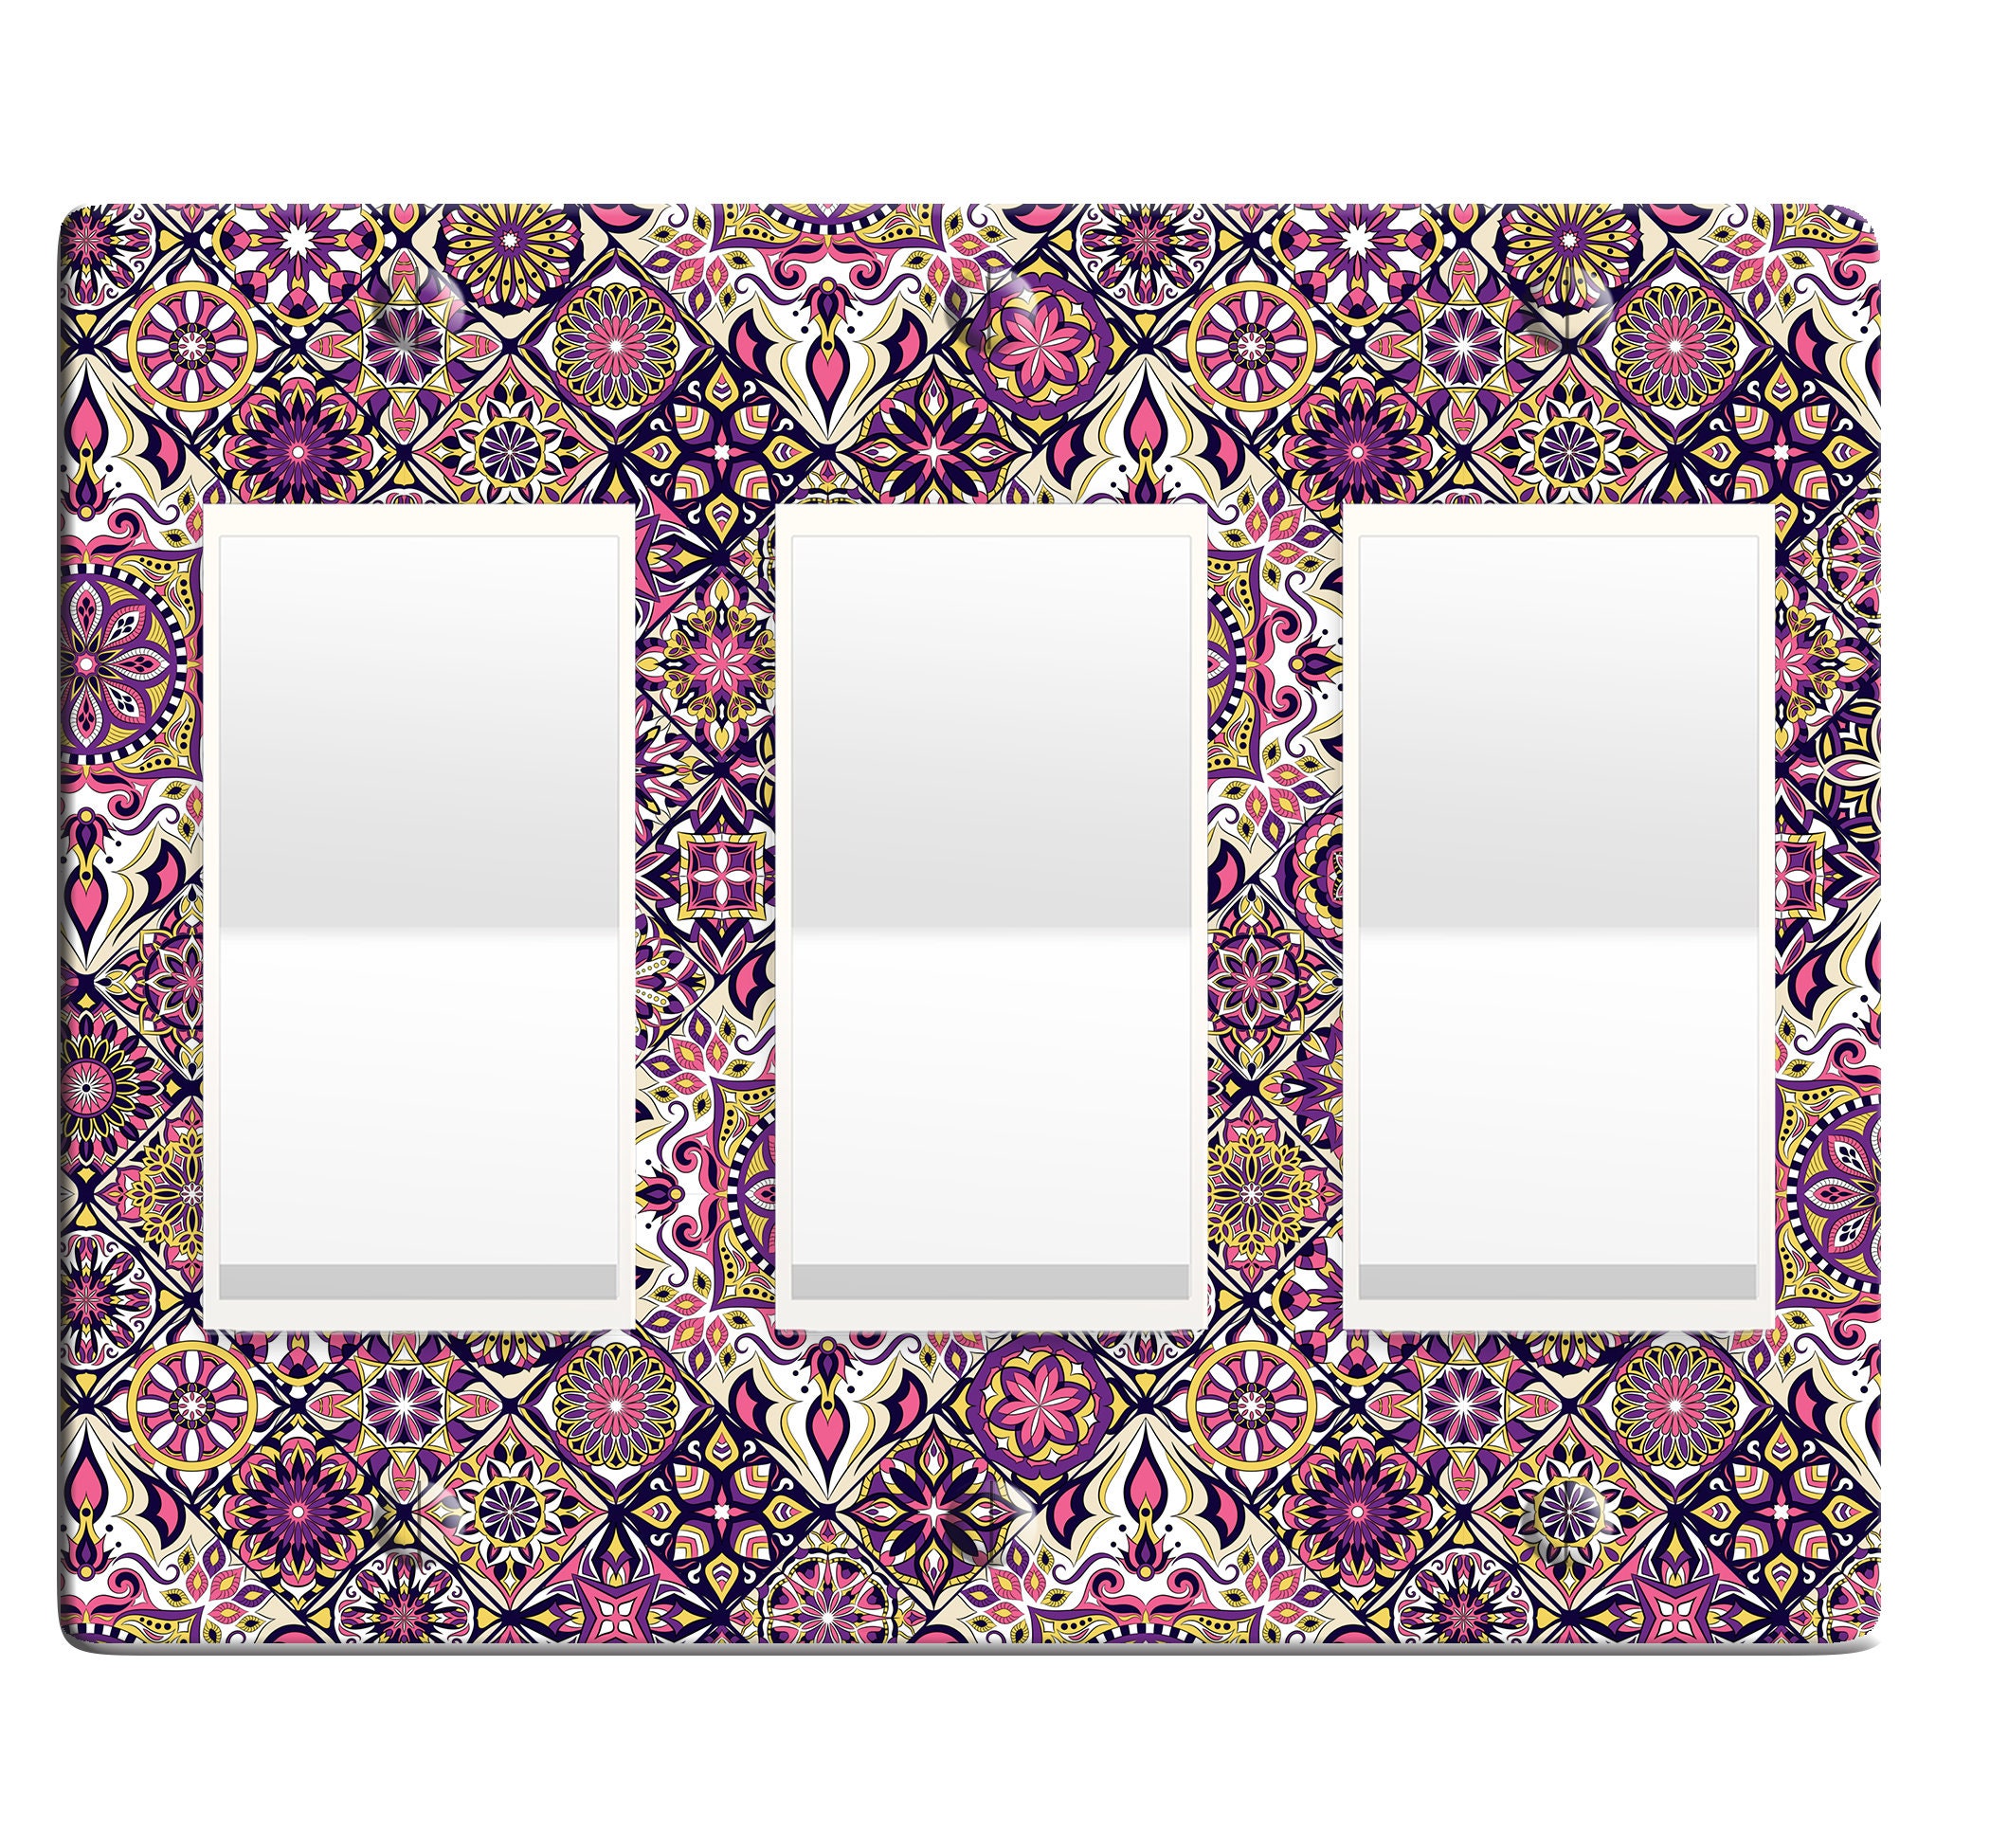 Embossi Printed Maxi Metal Ornate Mandala Tiles Switch Plate | Etsy